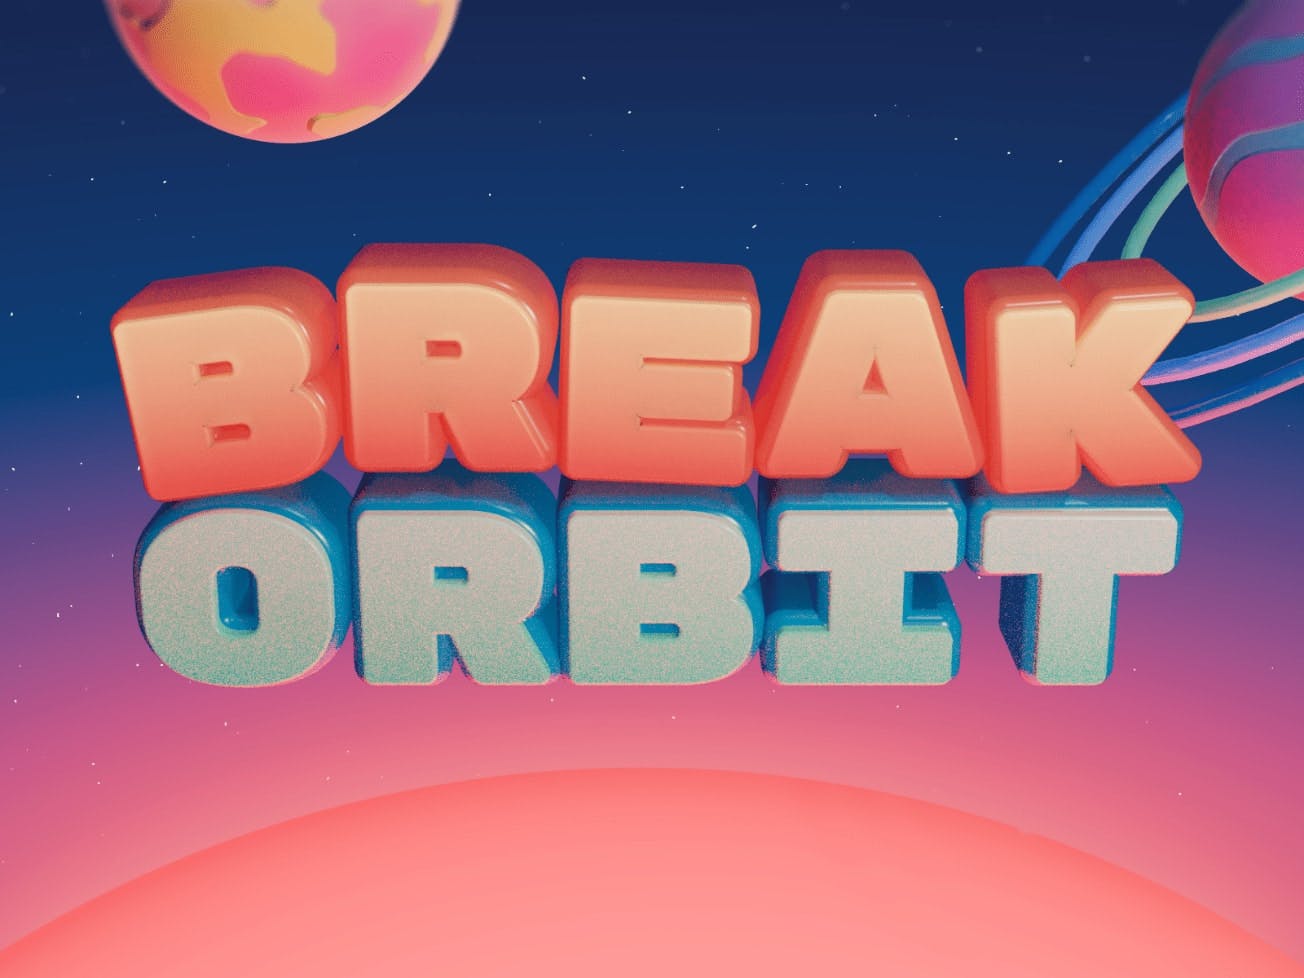 Break Orbit